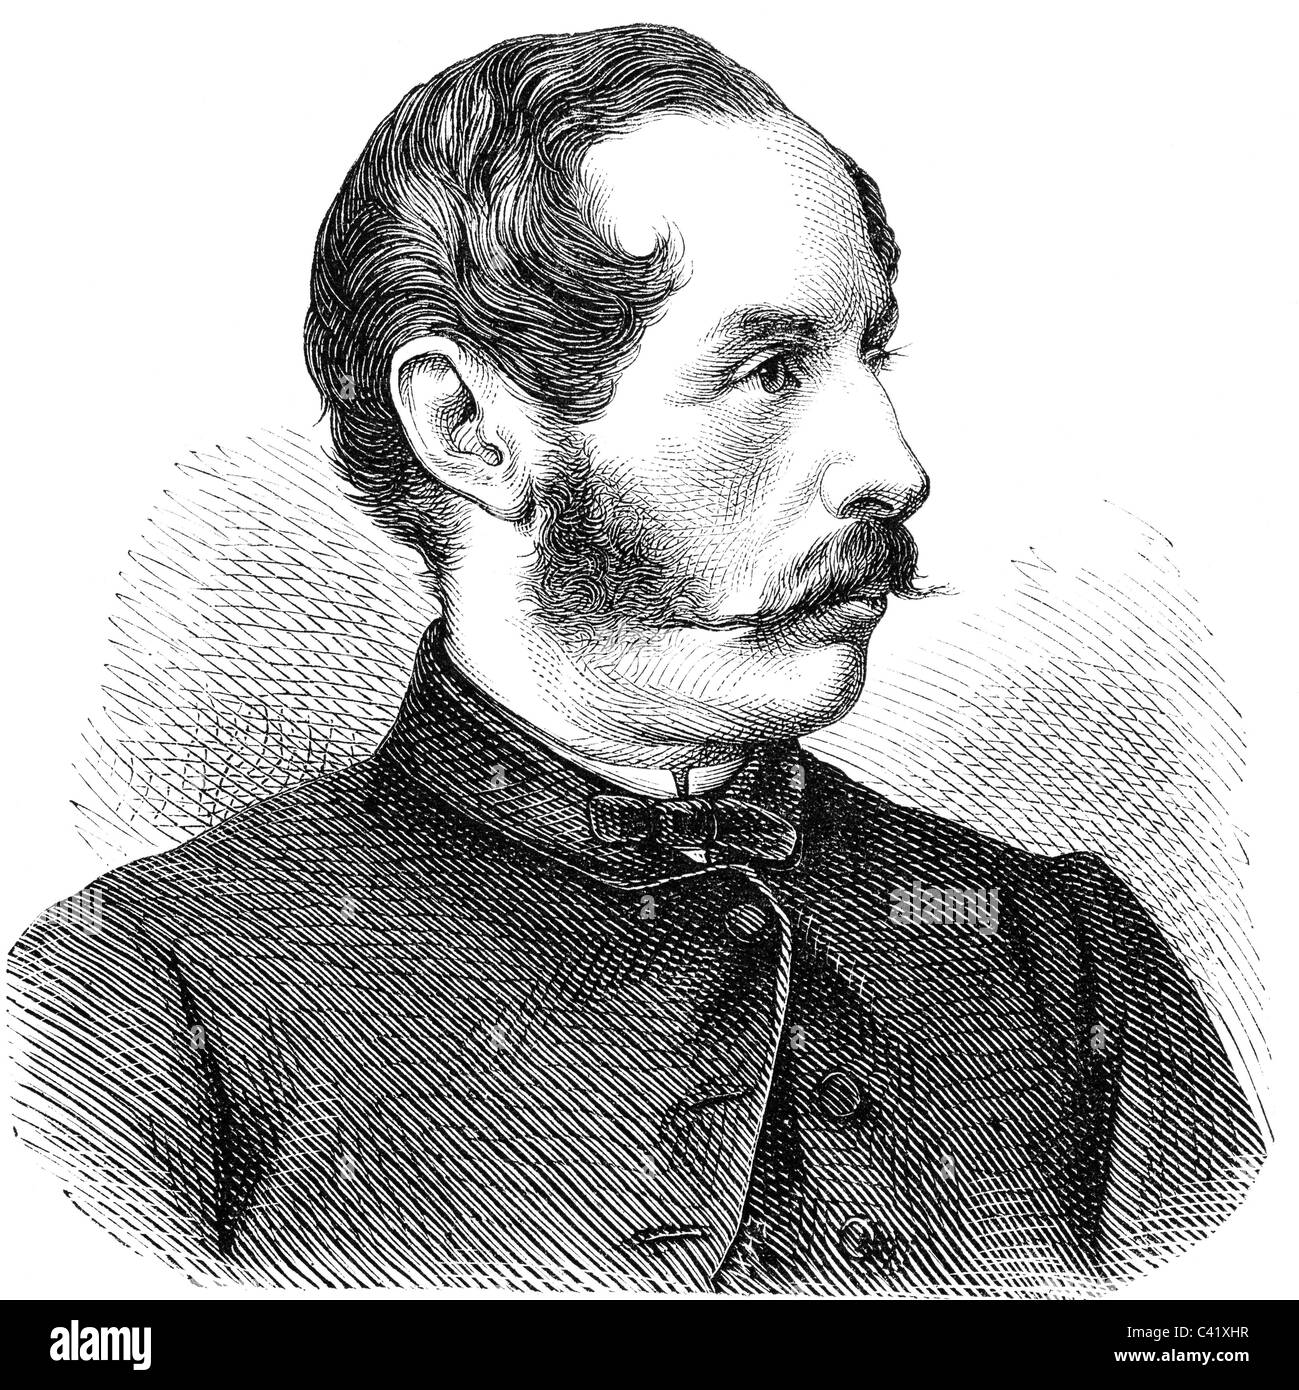 Chorinsky, Gustav Ignaz Count, 27.1.1806 - 15.10.1873, Austrian politician, wood engraving, 19th century, Stock Photo